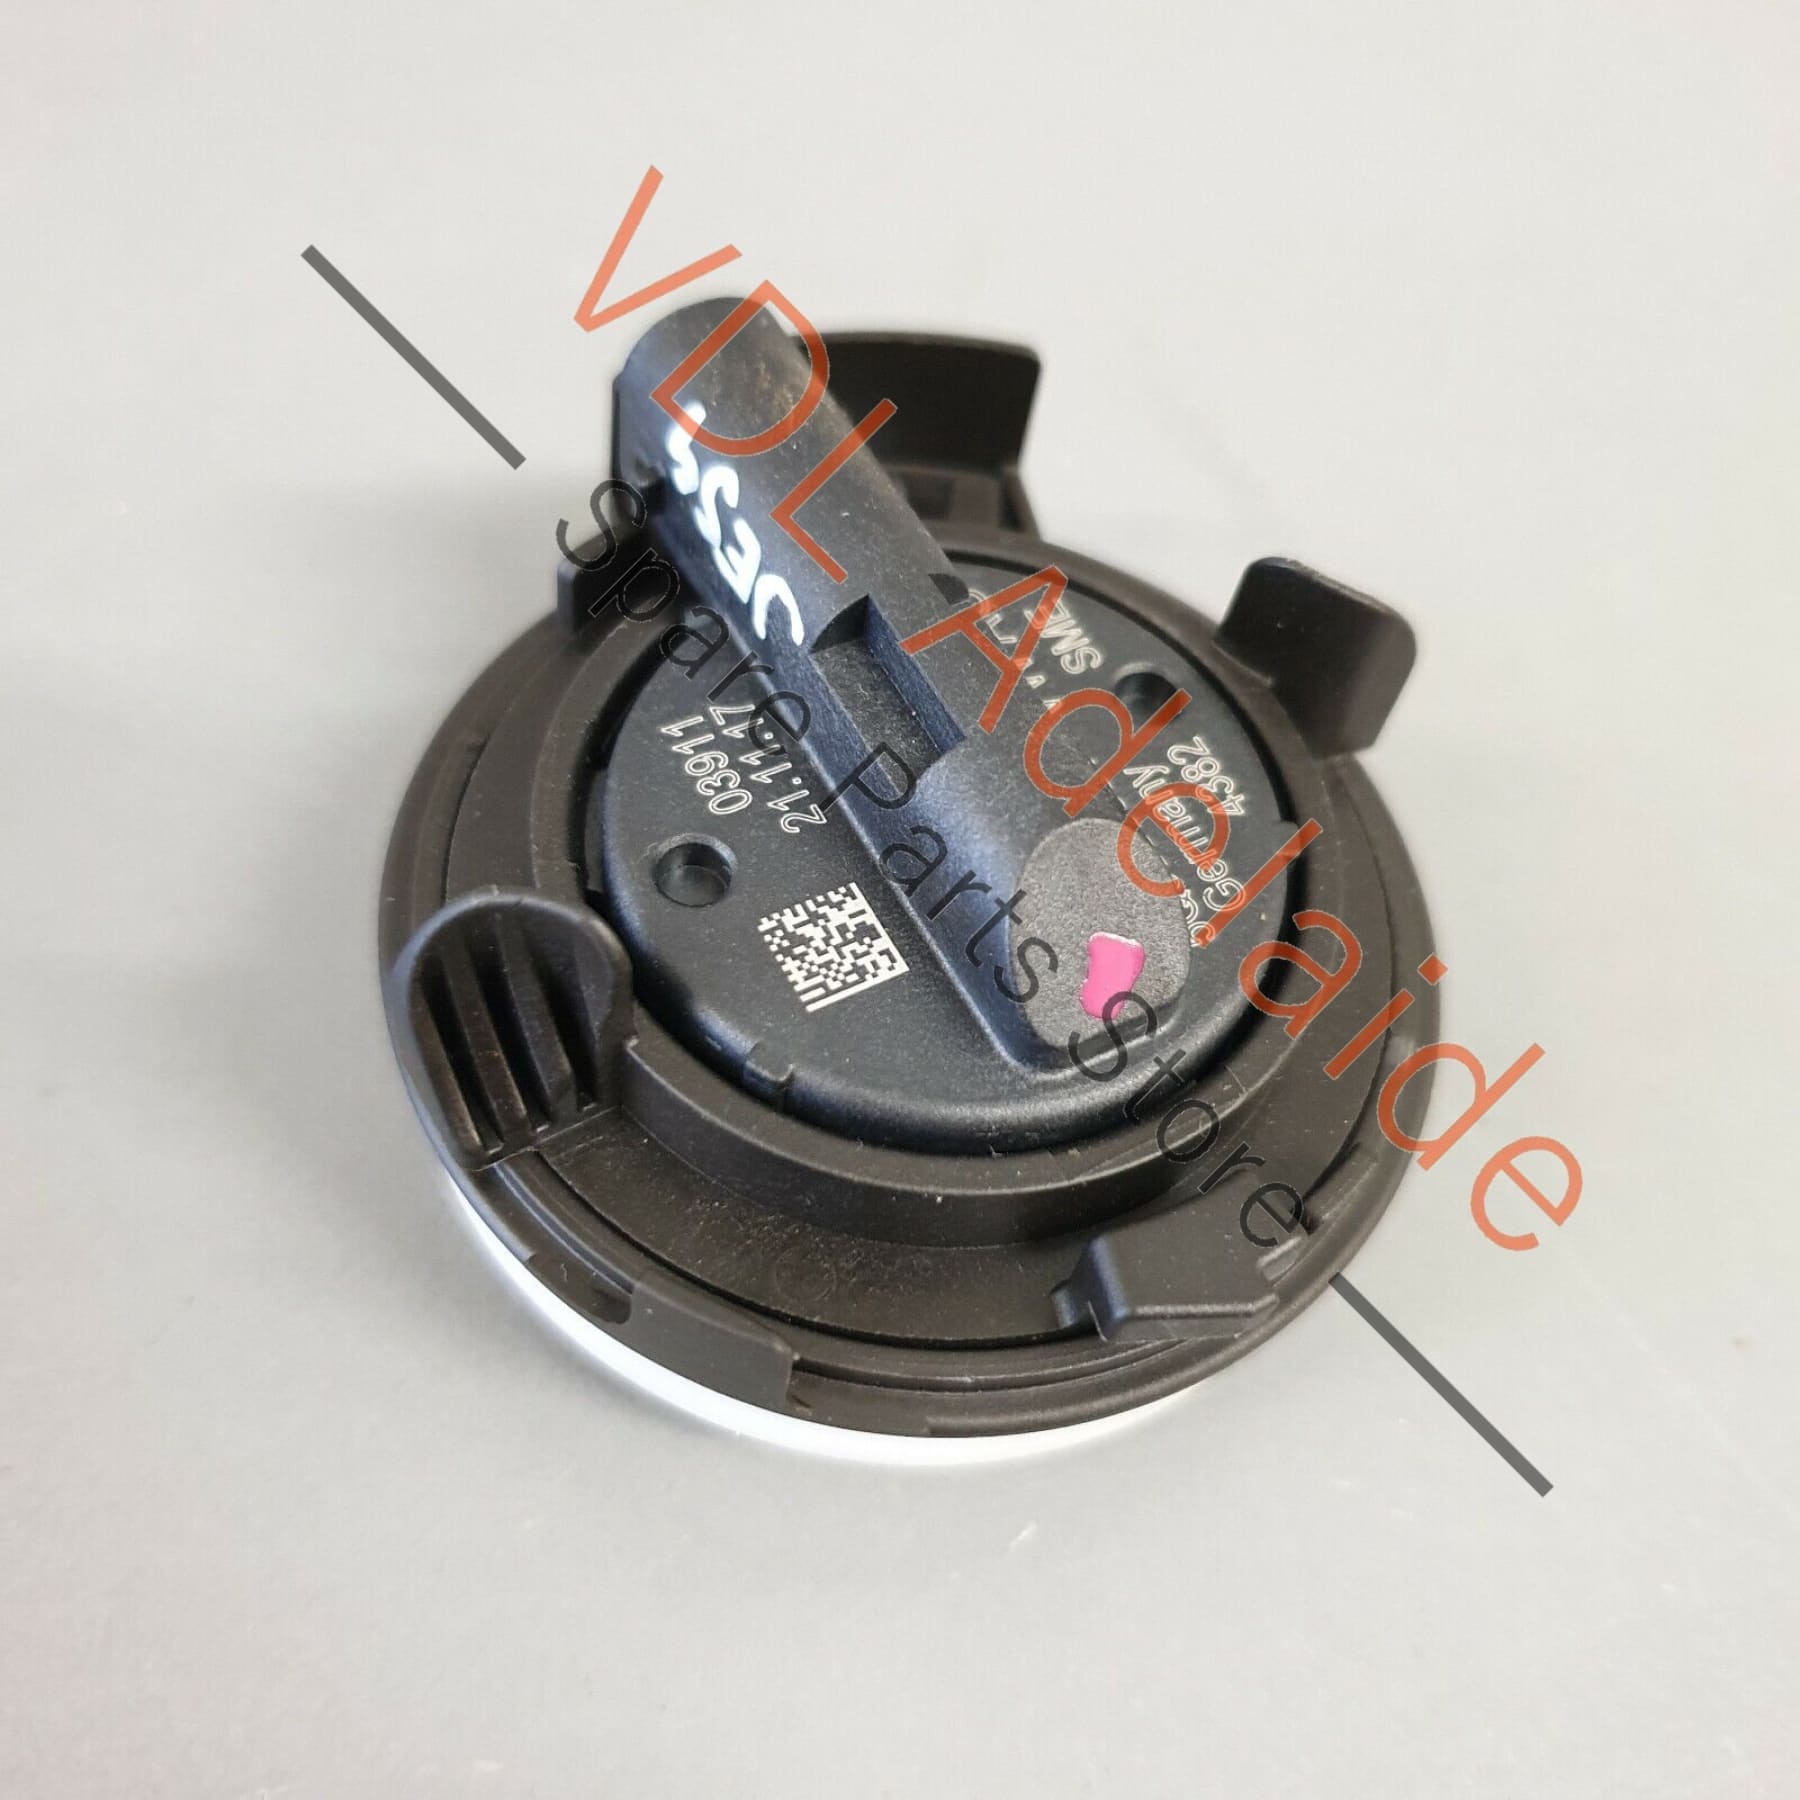 VW Tiguan MQB Gen2 Airbag Impact Pressure Sensor 5Q0959354 5Q0959354